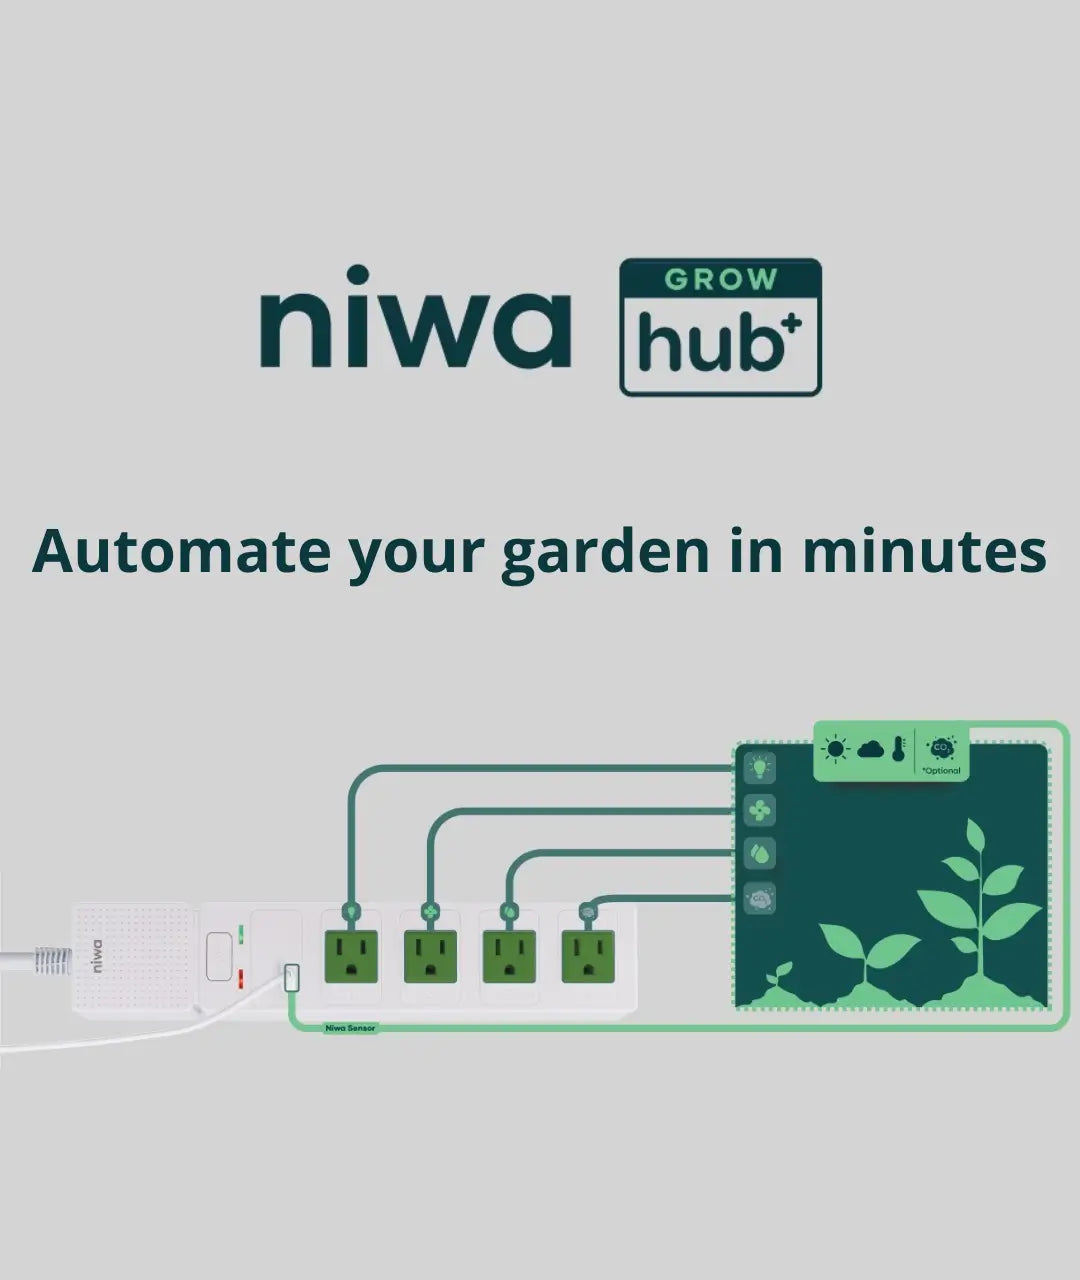 niwa grow hub banner